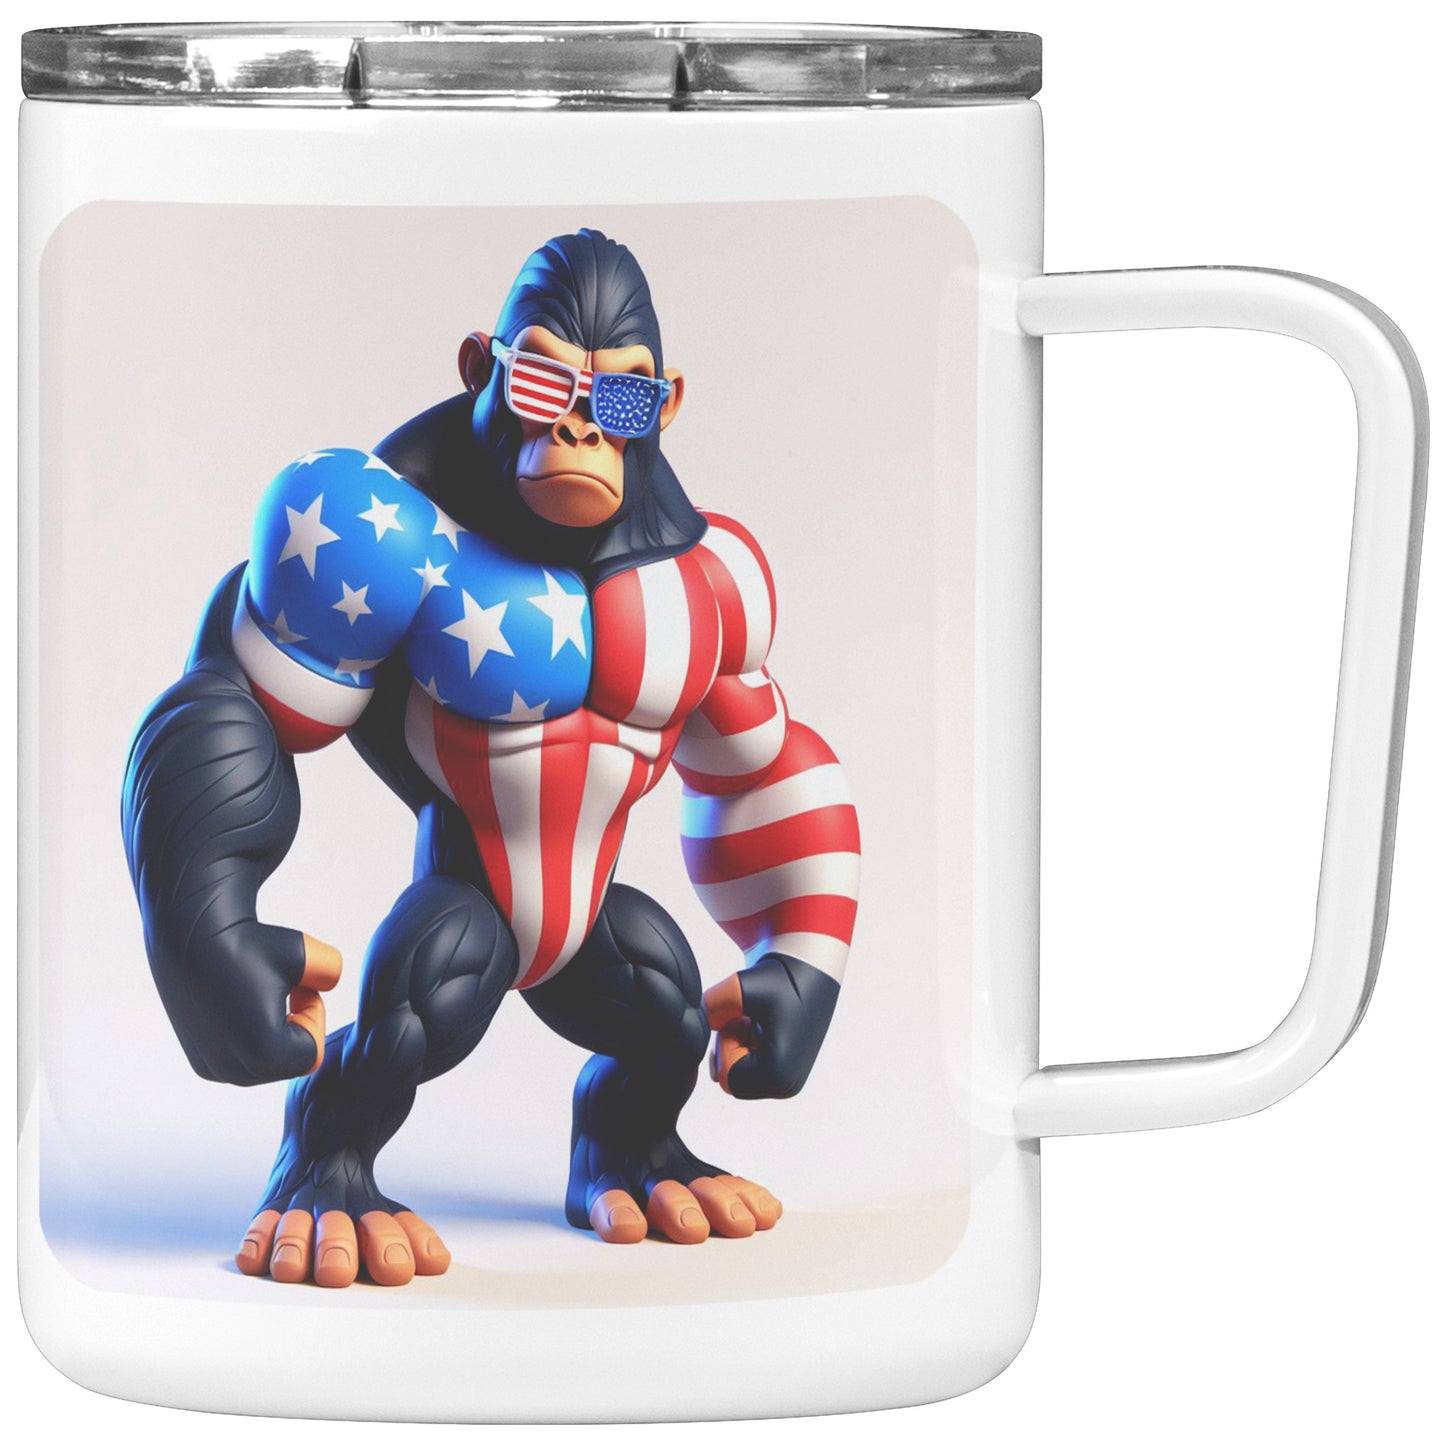 Grumpy Gorilla - Insulated Coffee Mug #5